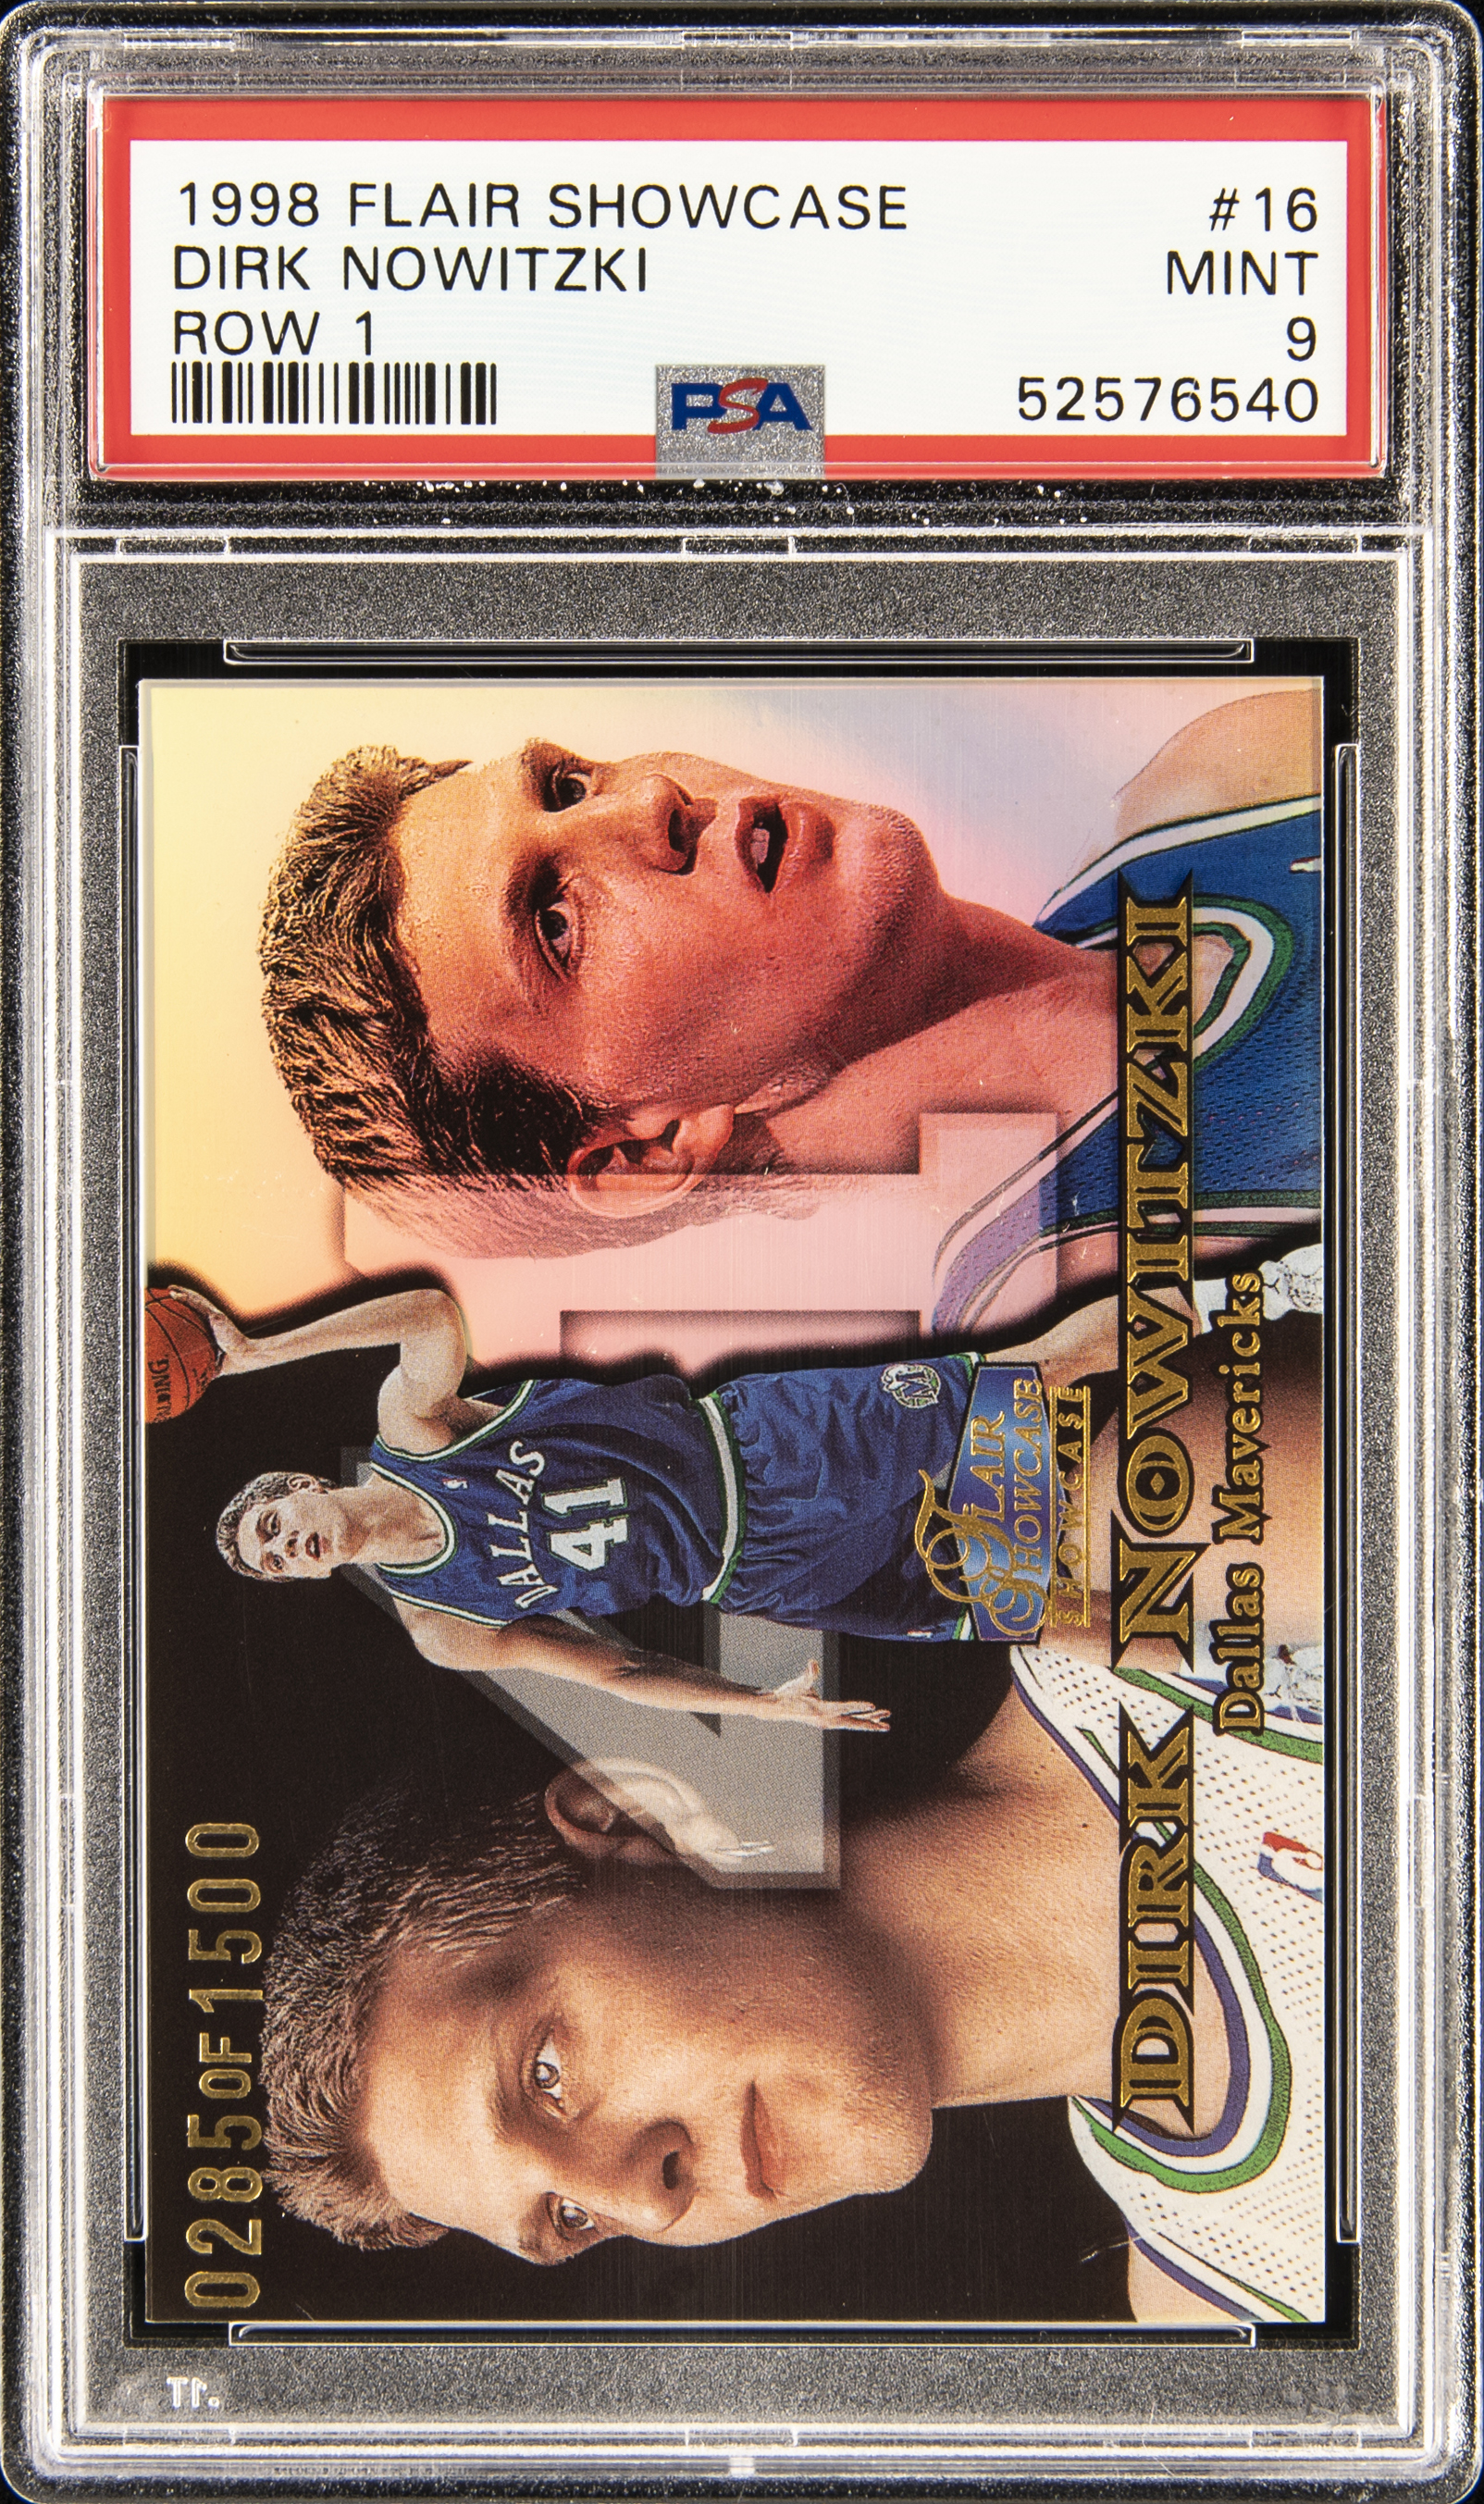 1998 Flair Showcase Row 1 16 Dirk Nowitzki Rookie Card – PSA MINT 9